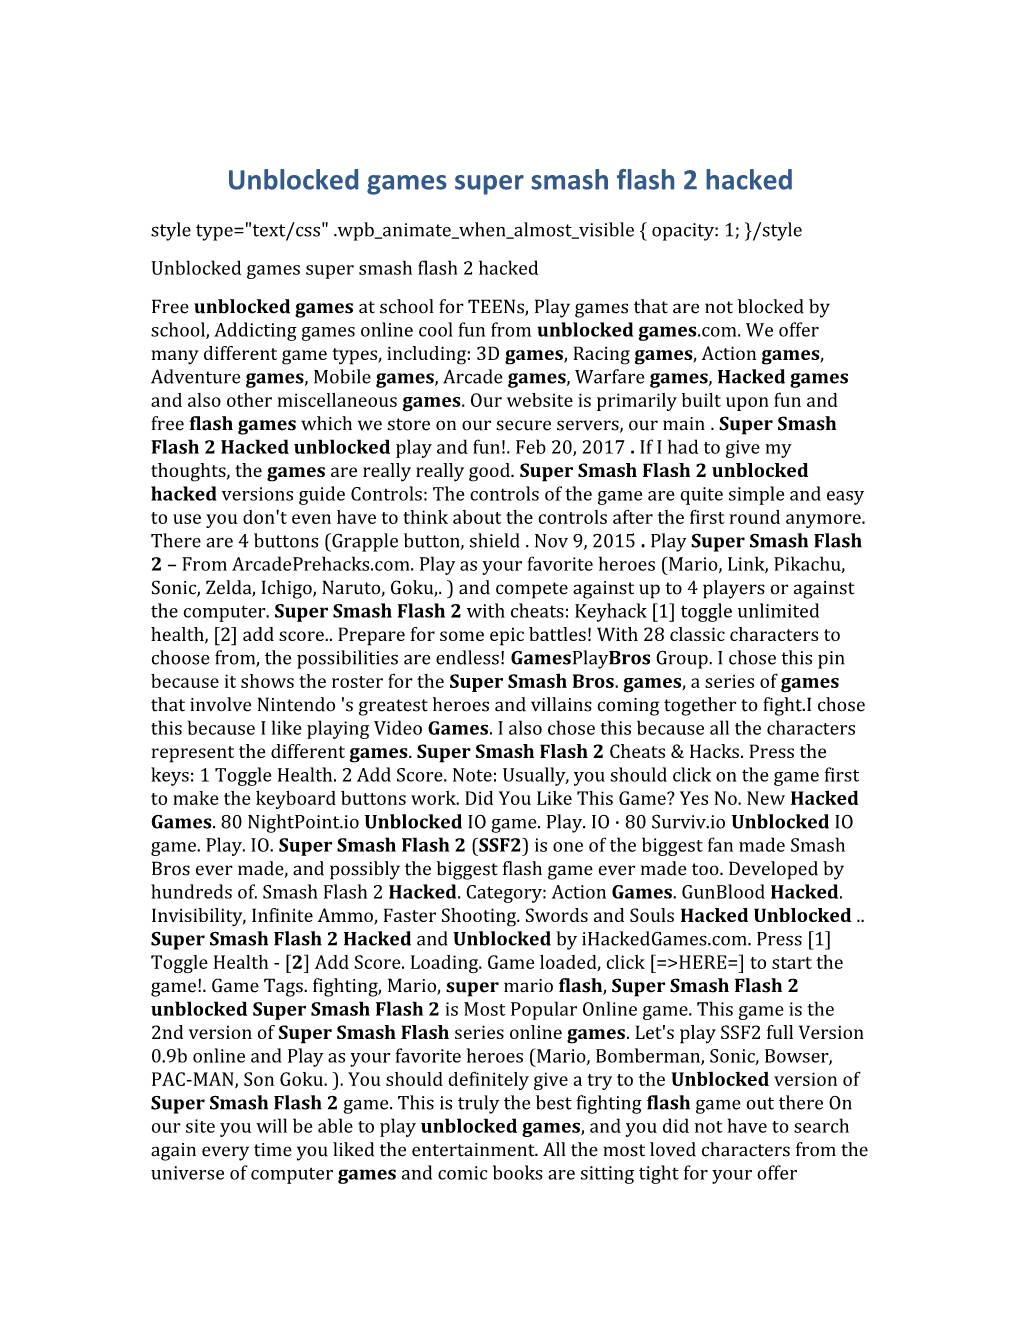 Unblocked Games Super Smash Flash 2 Hacked